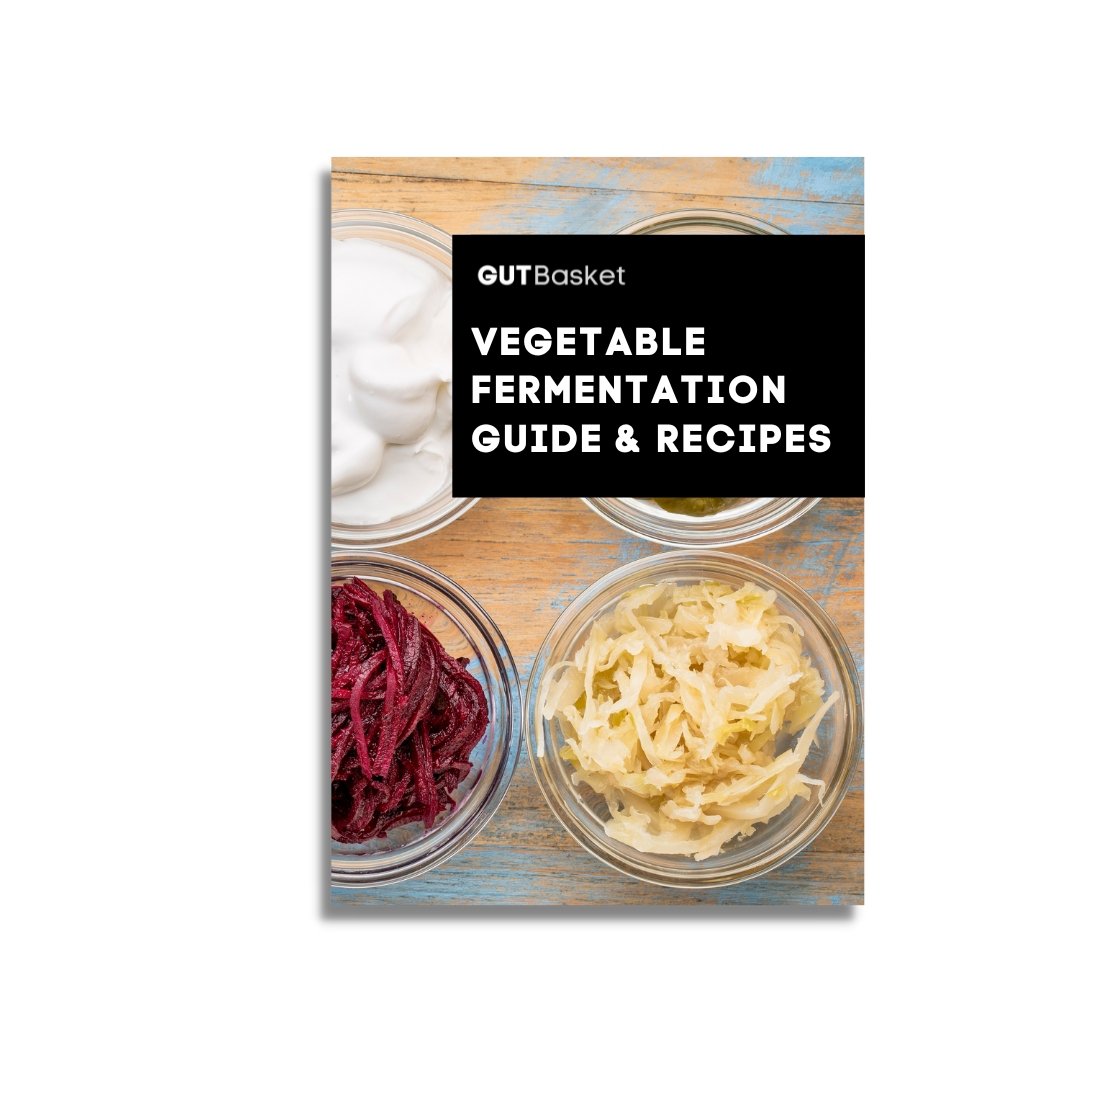 Vegetable fermentation recipe book - Gutbasket